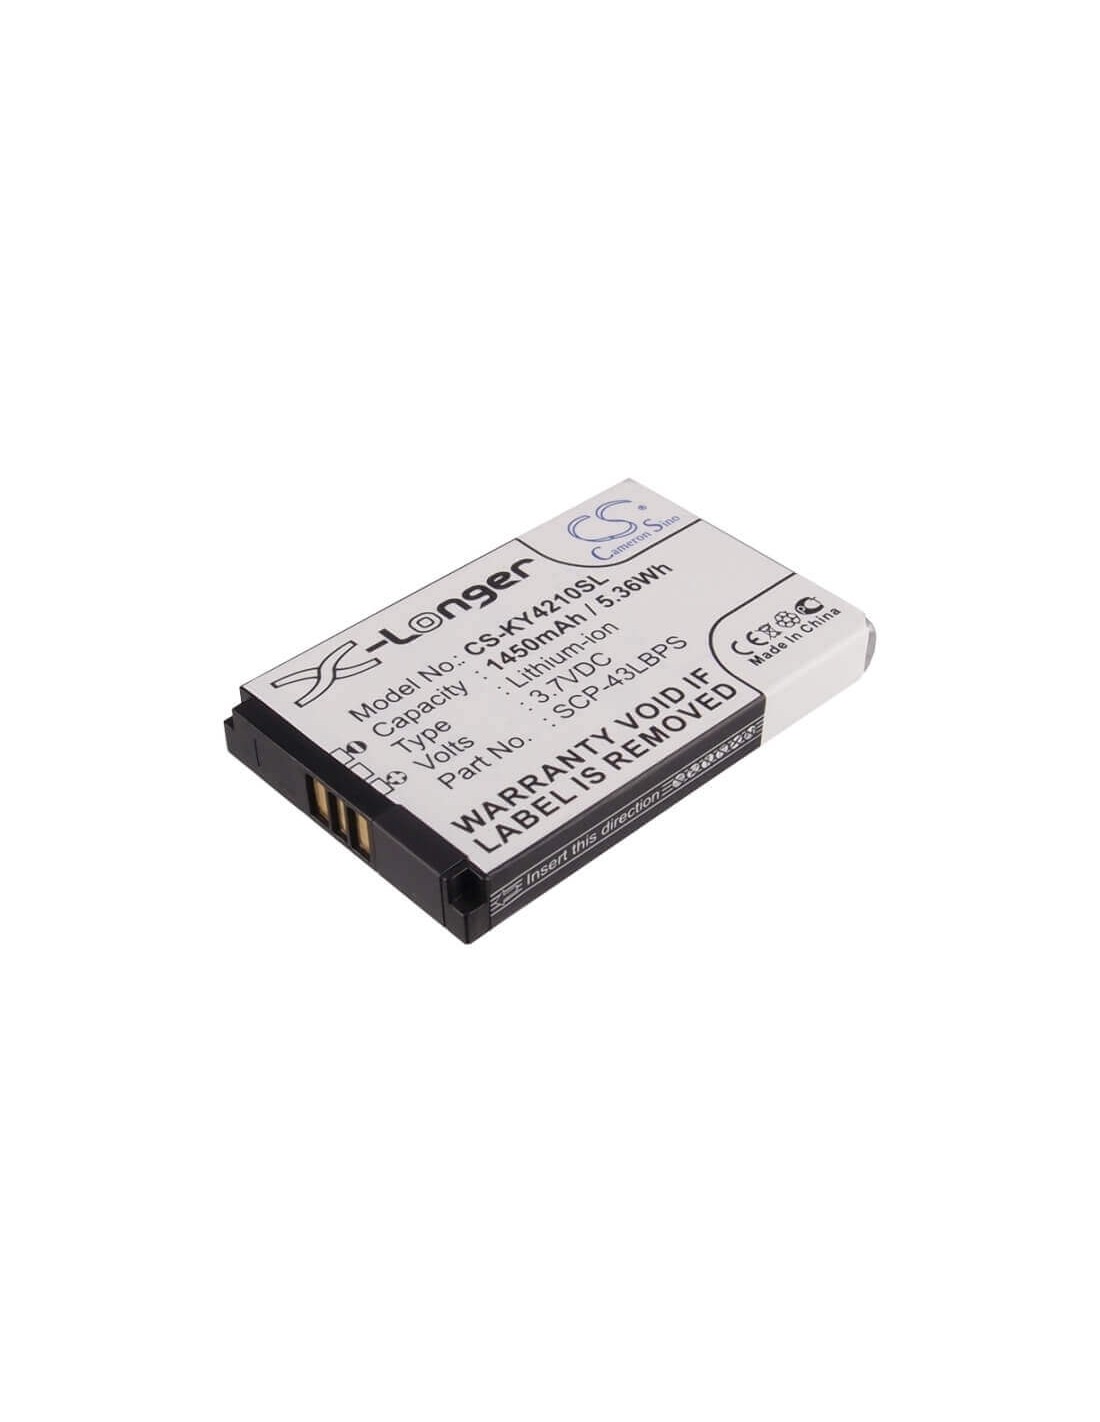 Battery for Kyocera DuraMax, E4210, E4225 3.7V, 1450mAh - 5.37Wh